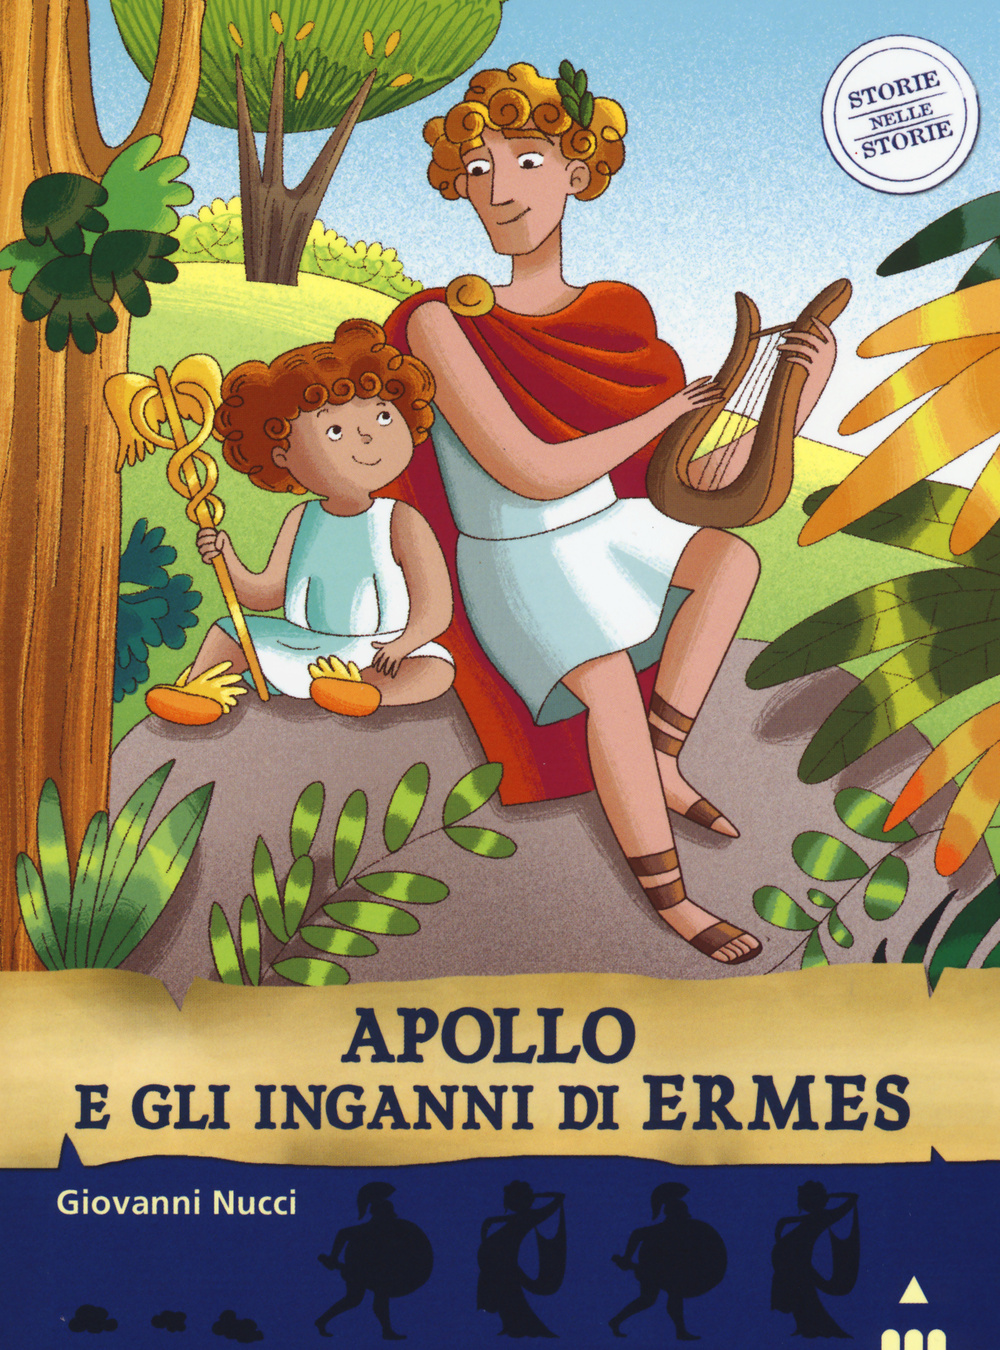 Apollo e gli inganni di Ermes. Storie nelle storie. Ediz. illustrata